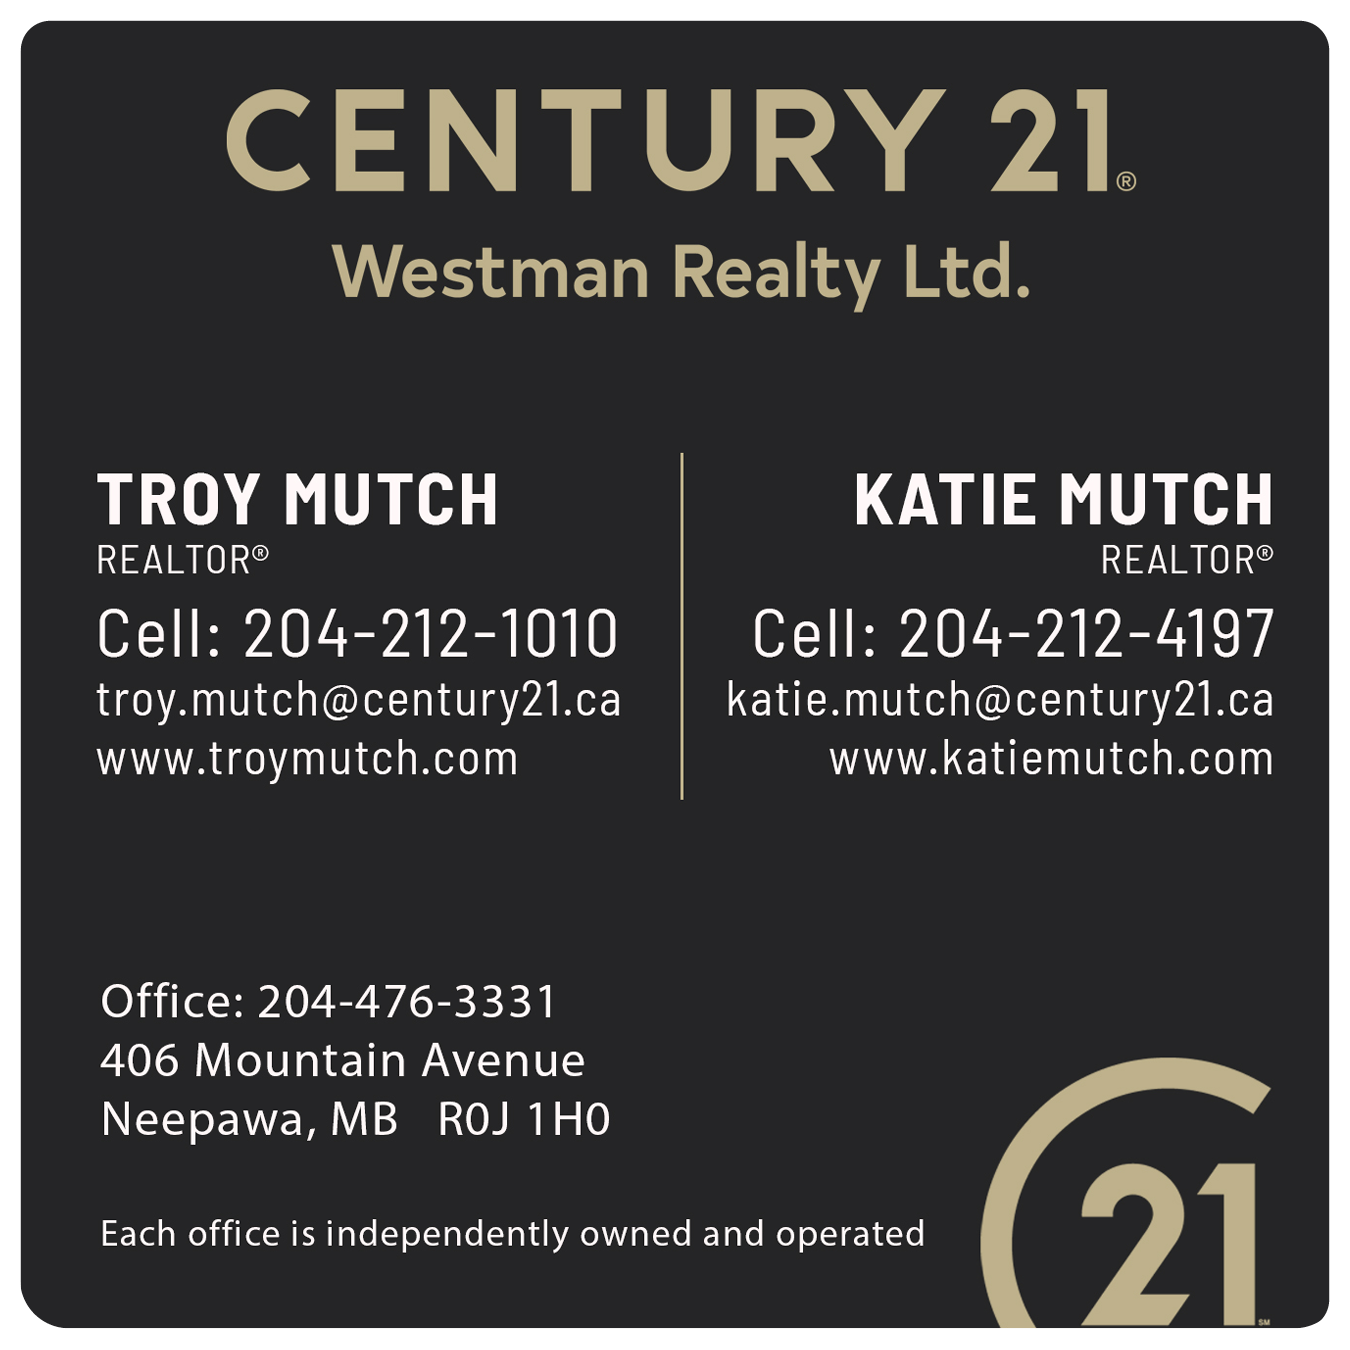 Troy Mutch - Century 21 Westman Realty Ltd.